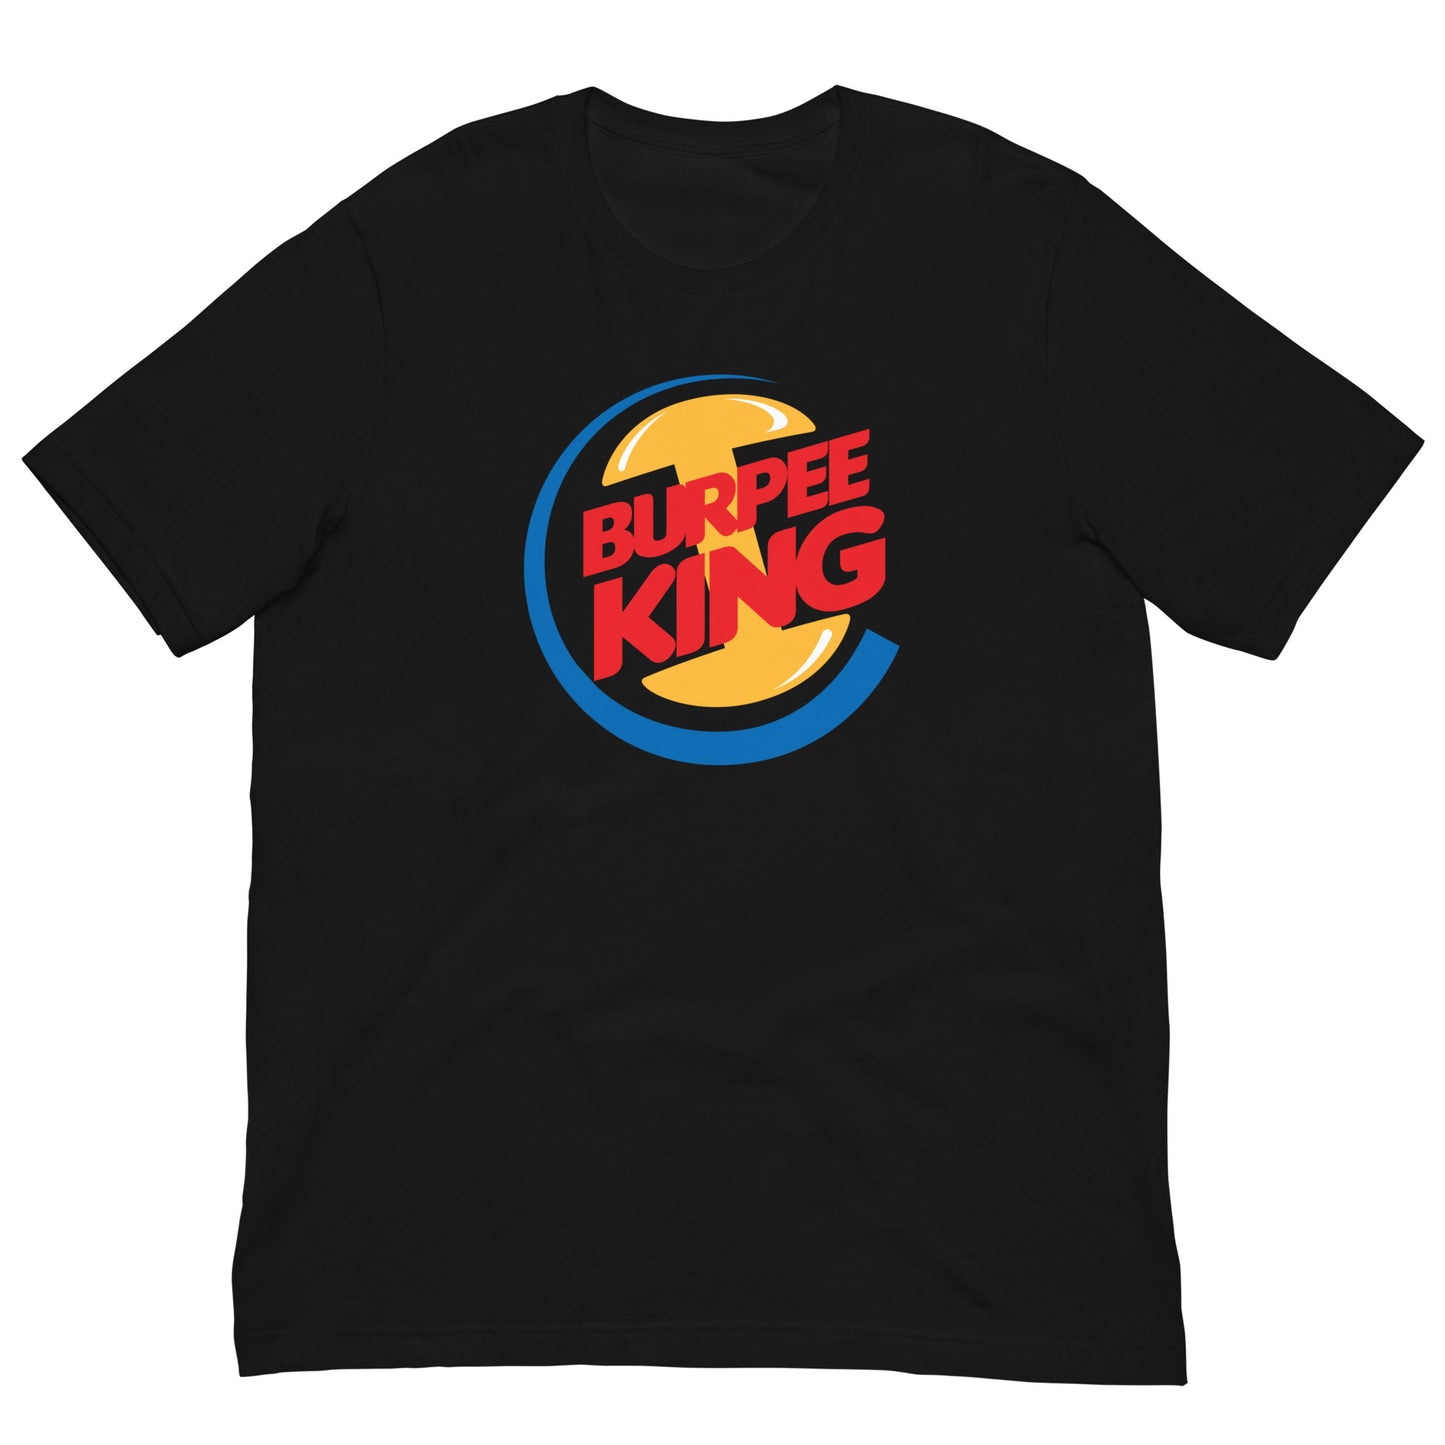 Burpee King T-shirt